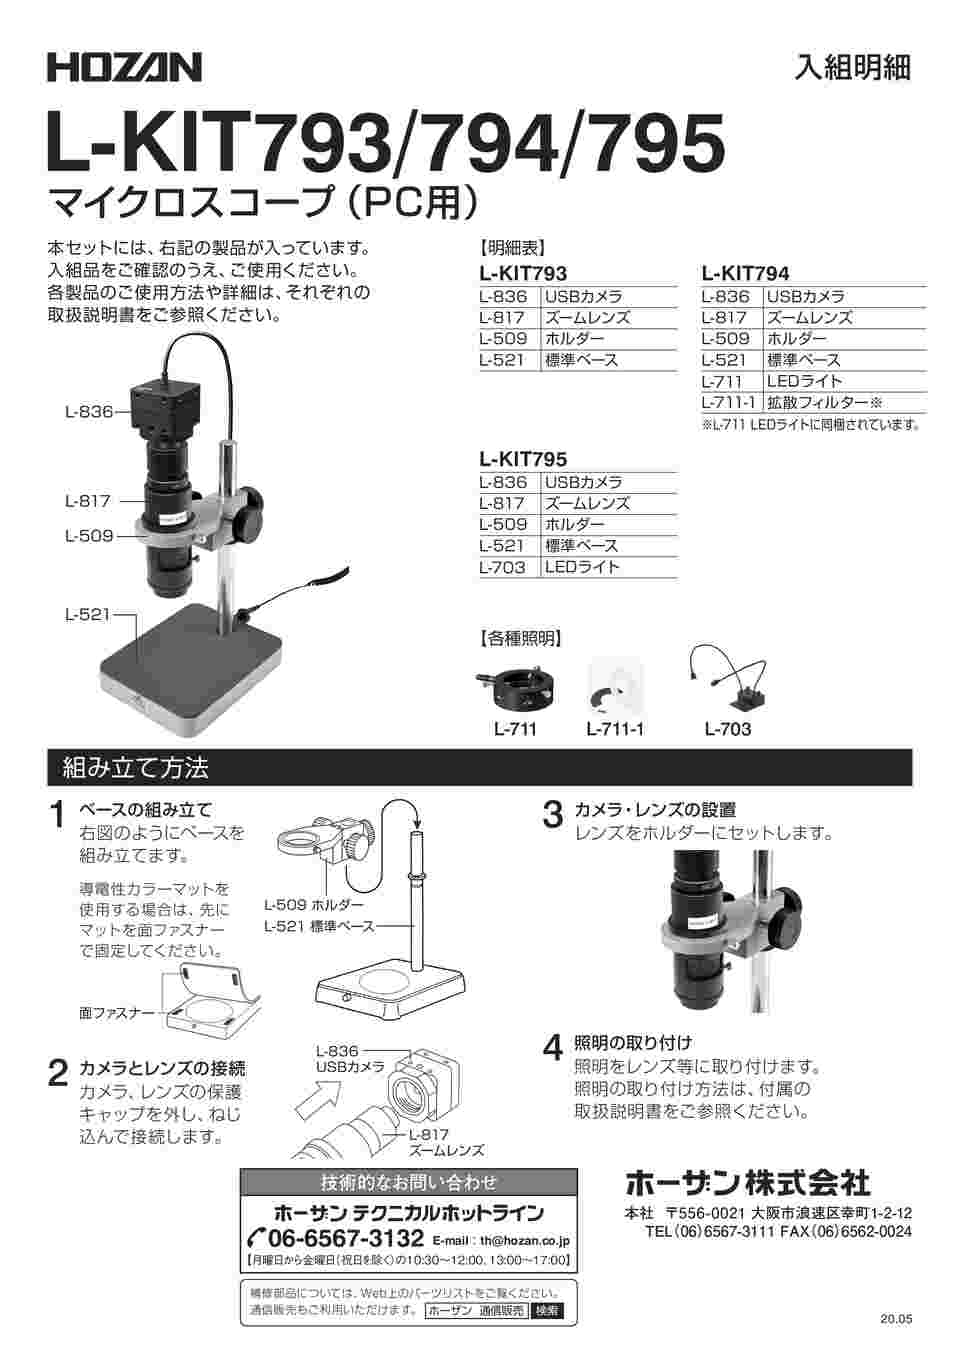 SEAL限定商品】 ホーザン マイクロスコープ PC用 L-KIT514 L-711付